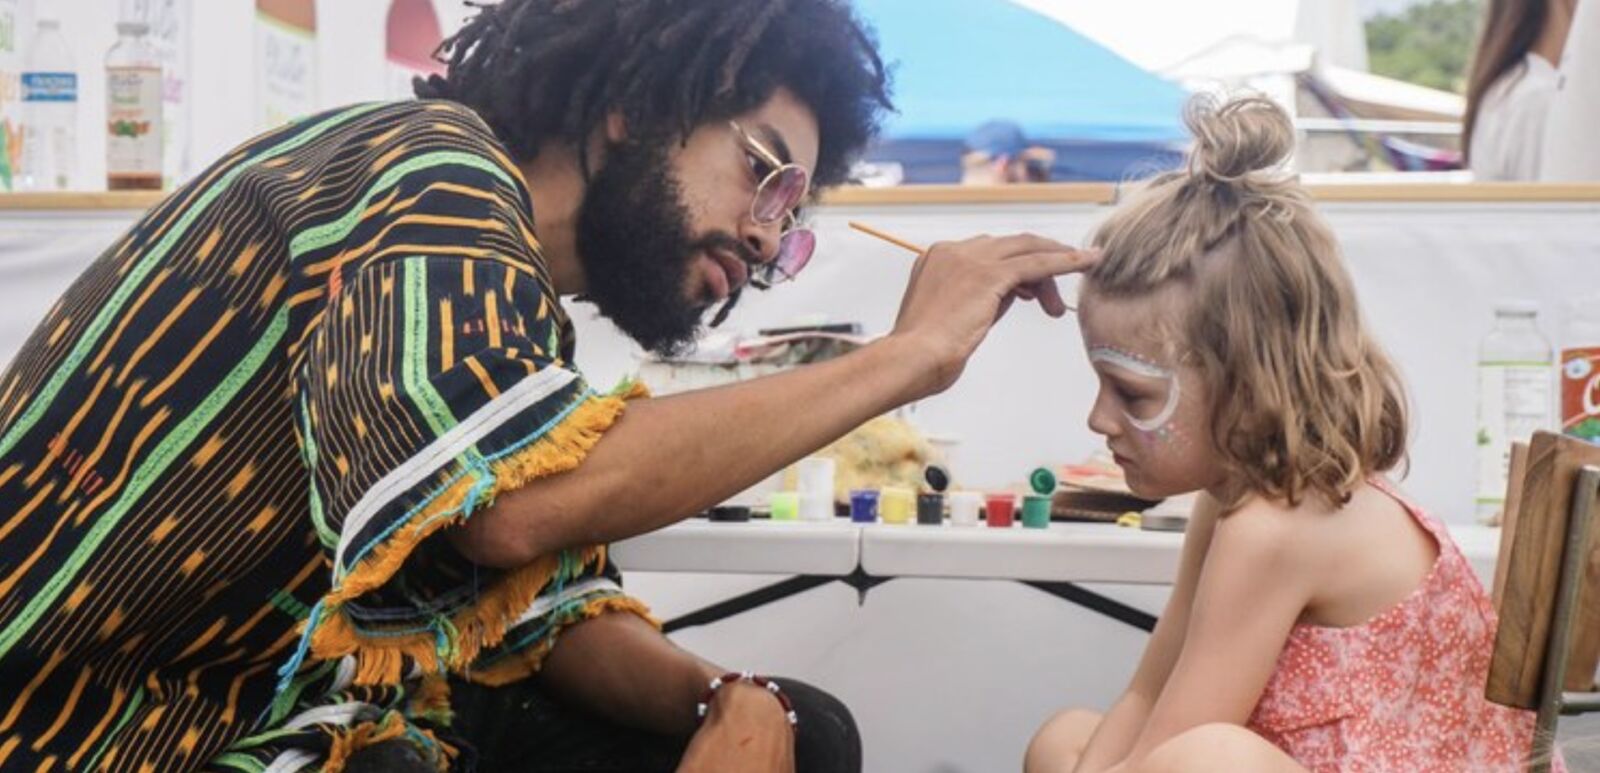 An artist paints a girl's face at Eclipse Utopiafest.